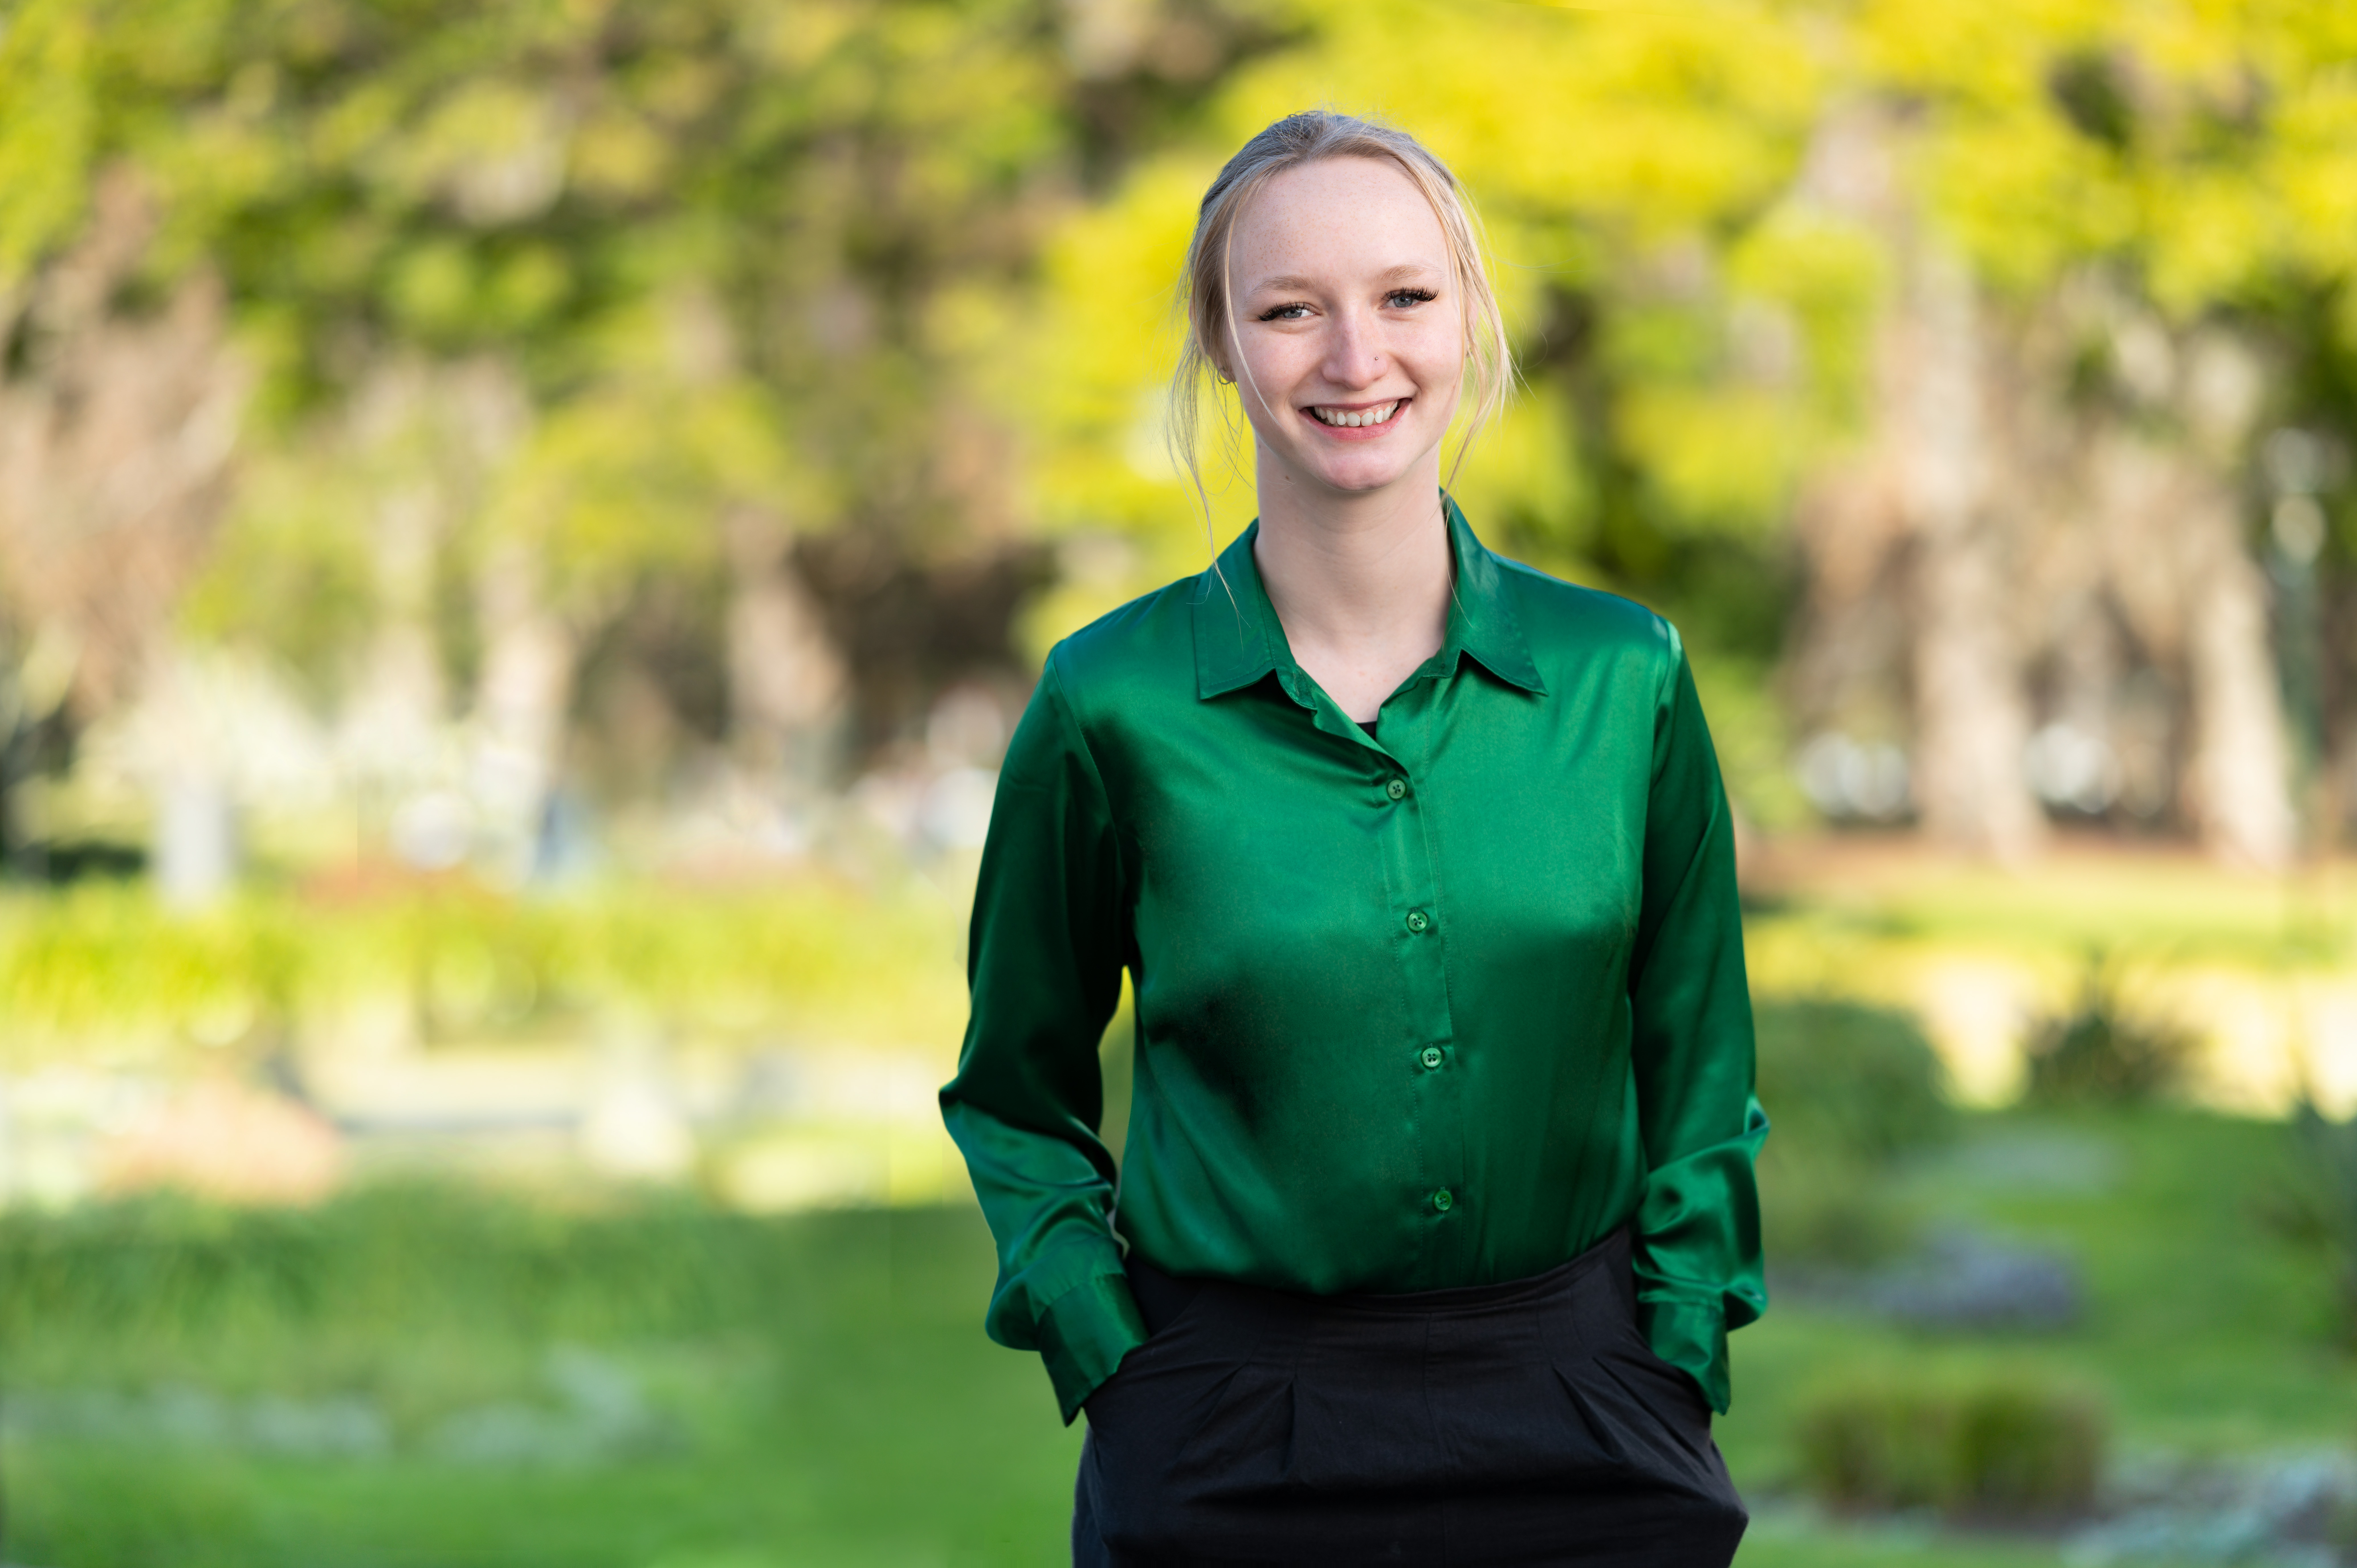 Nyssa Leereveld, Greens Candidate for Whitehorse City Council - Cootamunda Ward